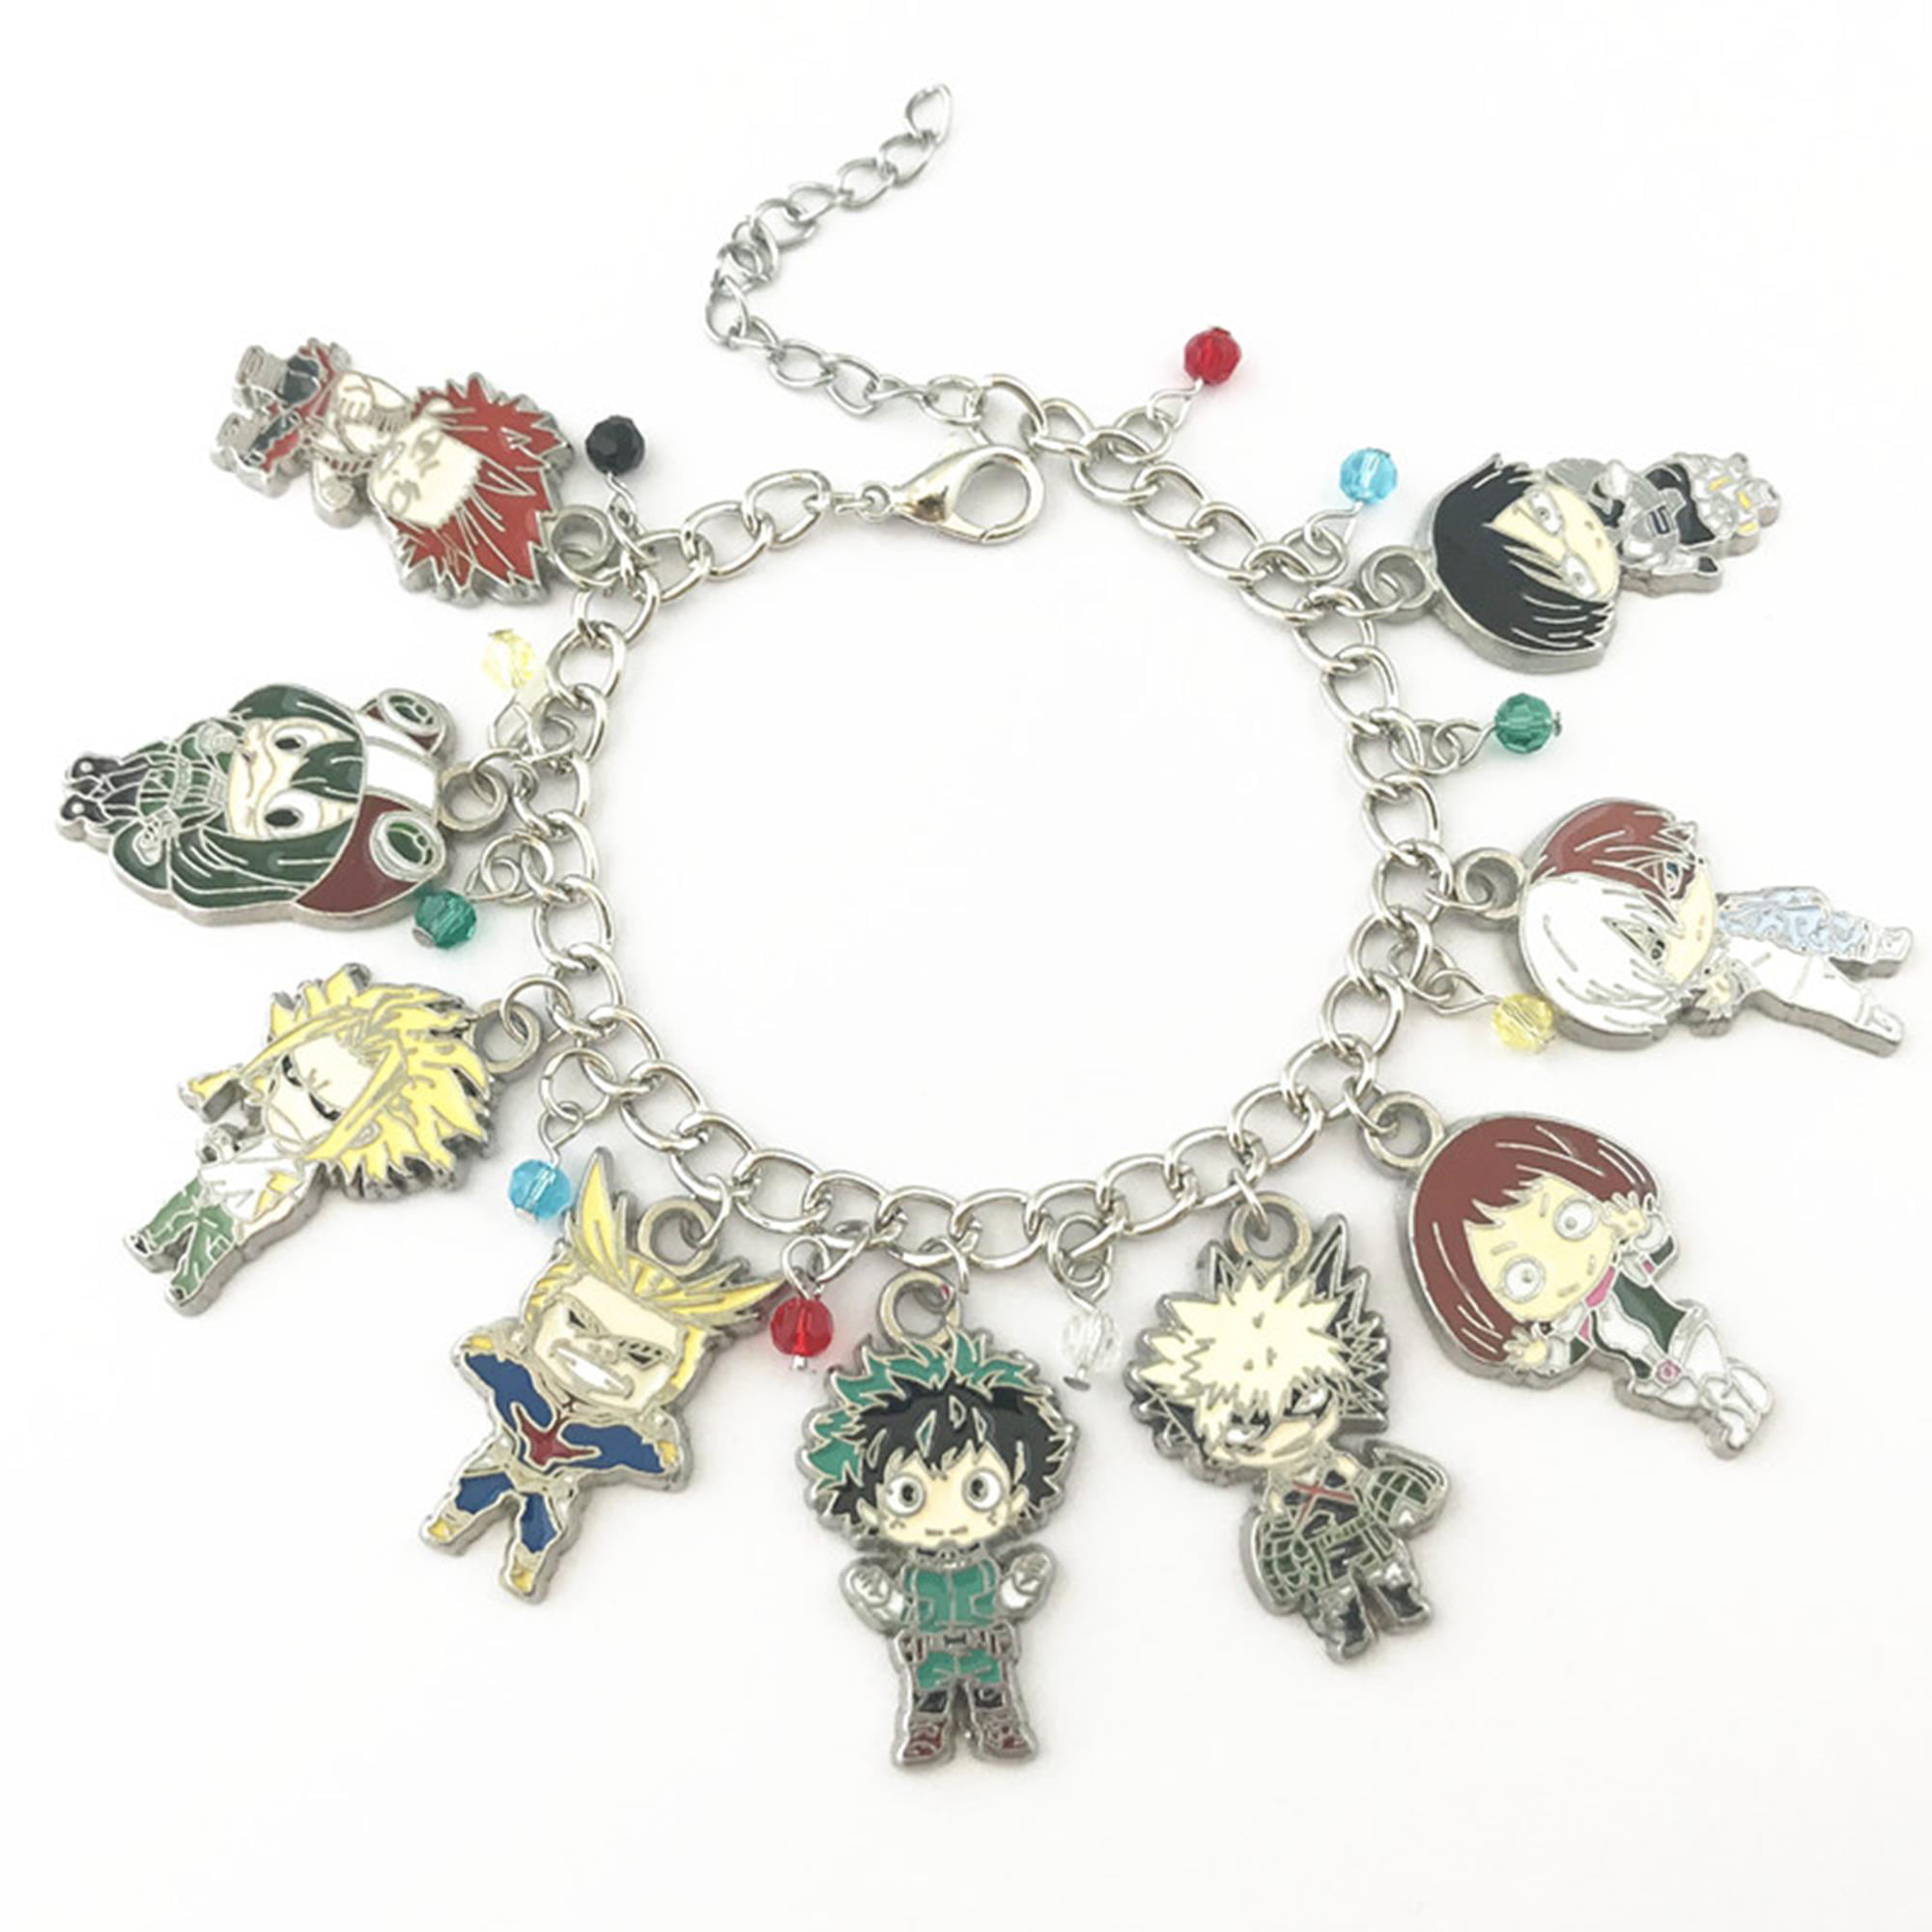 DEPD My Hero Academia Anime Manga Charm Bracelet Quality Cosplay Jewelry Series 